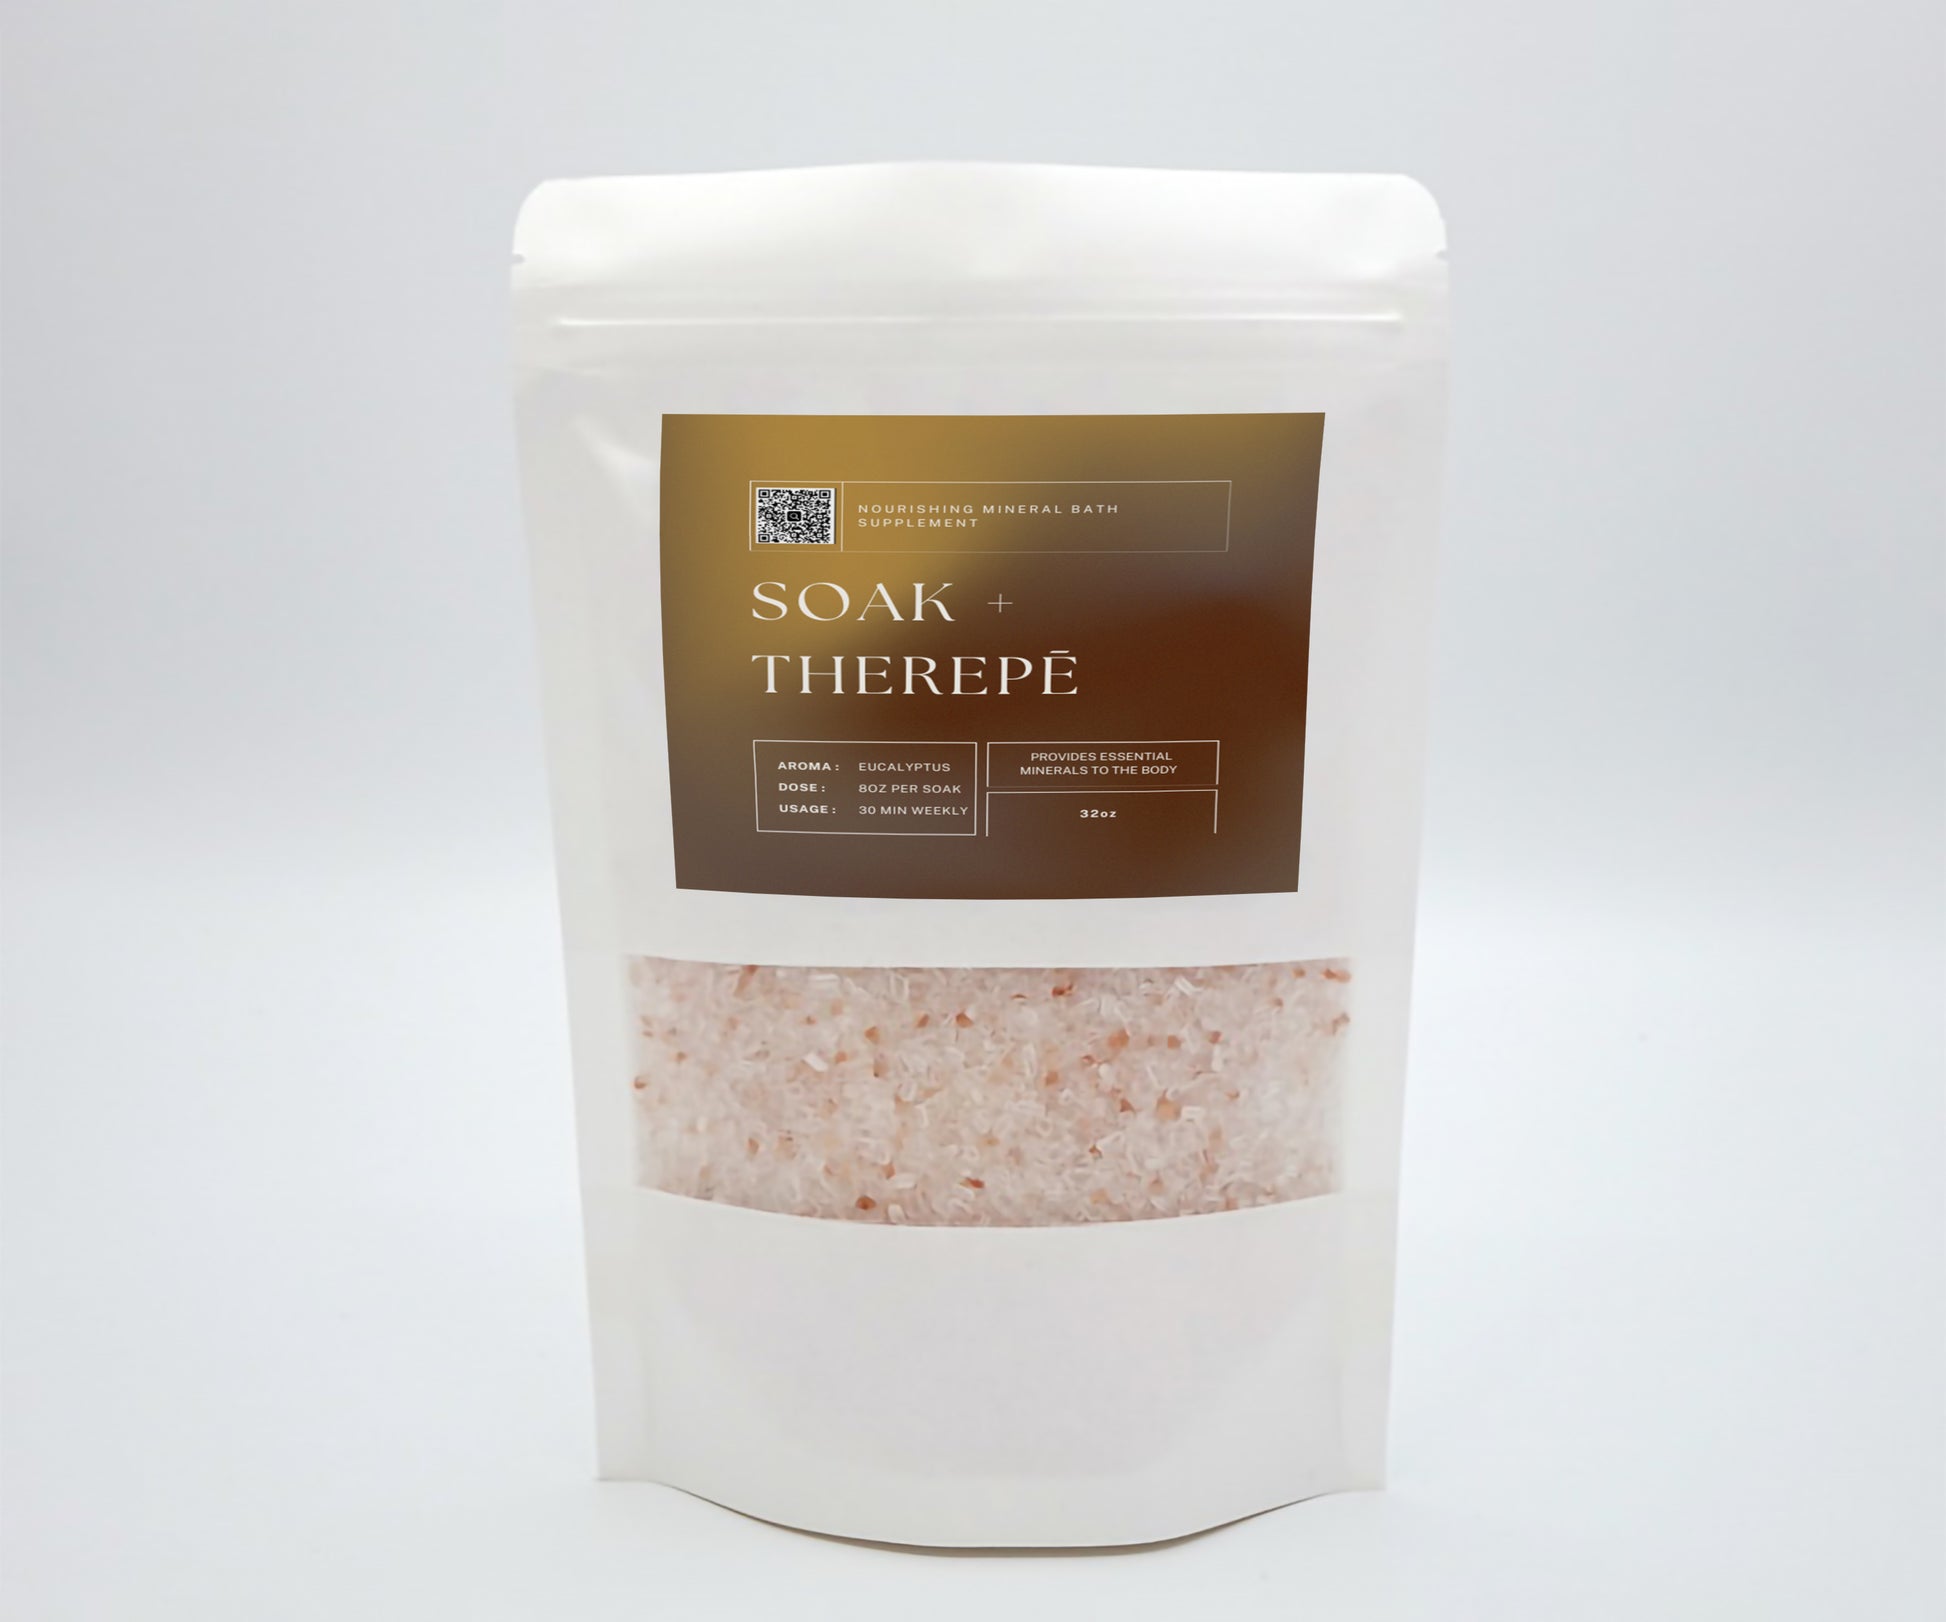 eco-friendly bath salt product with eucalyptus essential oil. Nourishing mineral bath soak for wellness